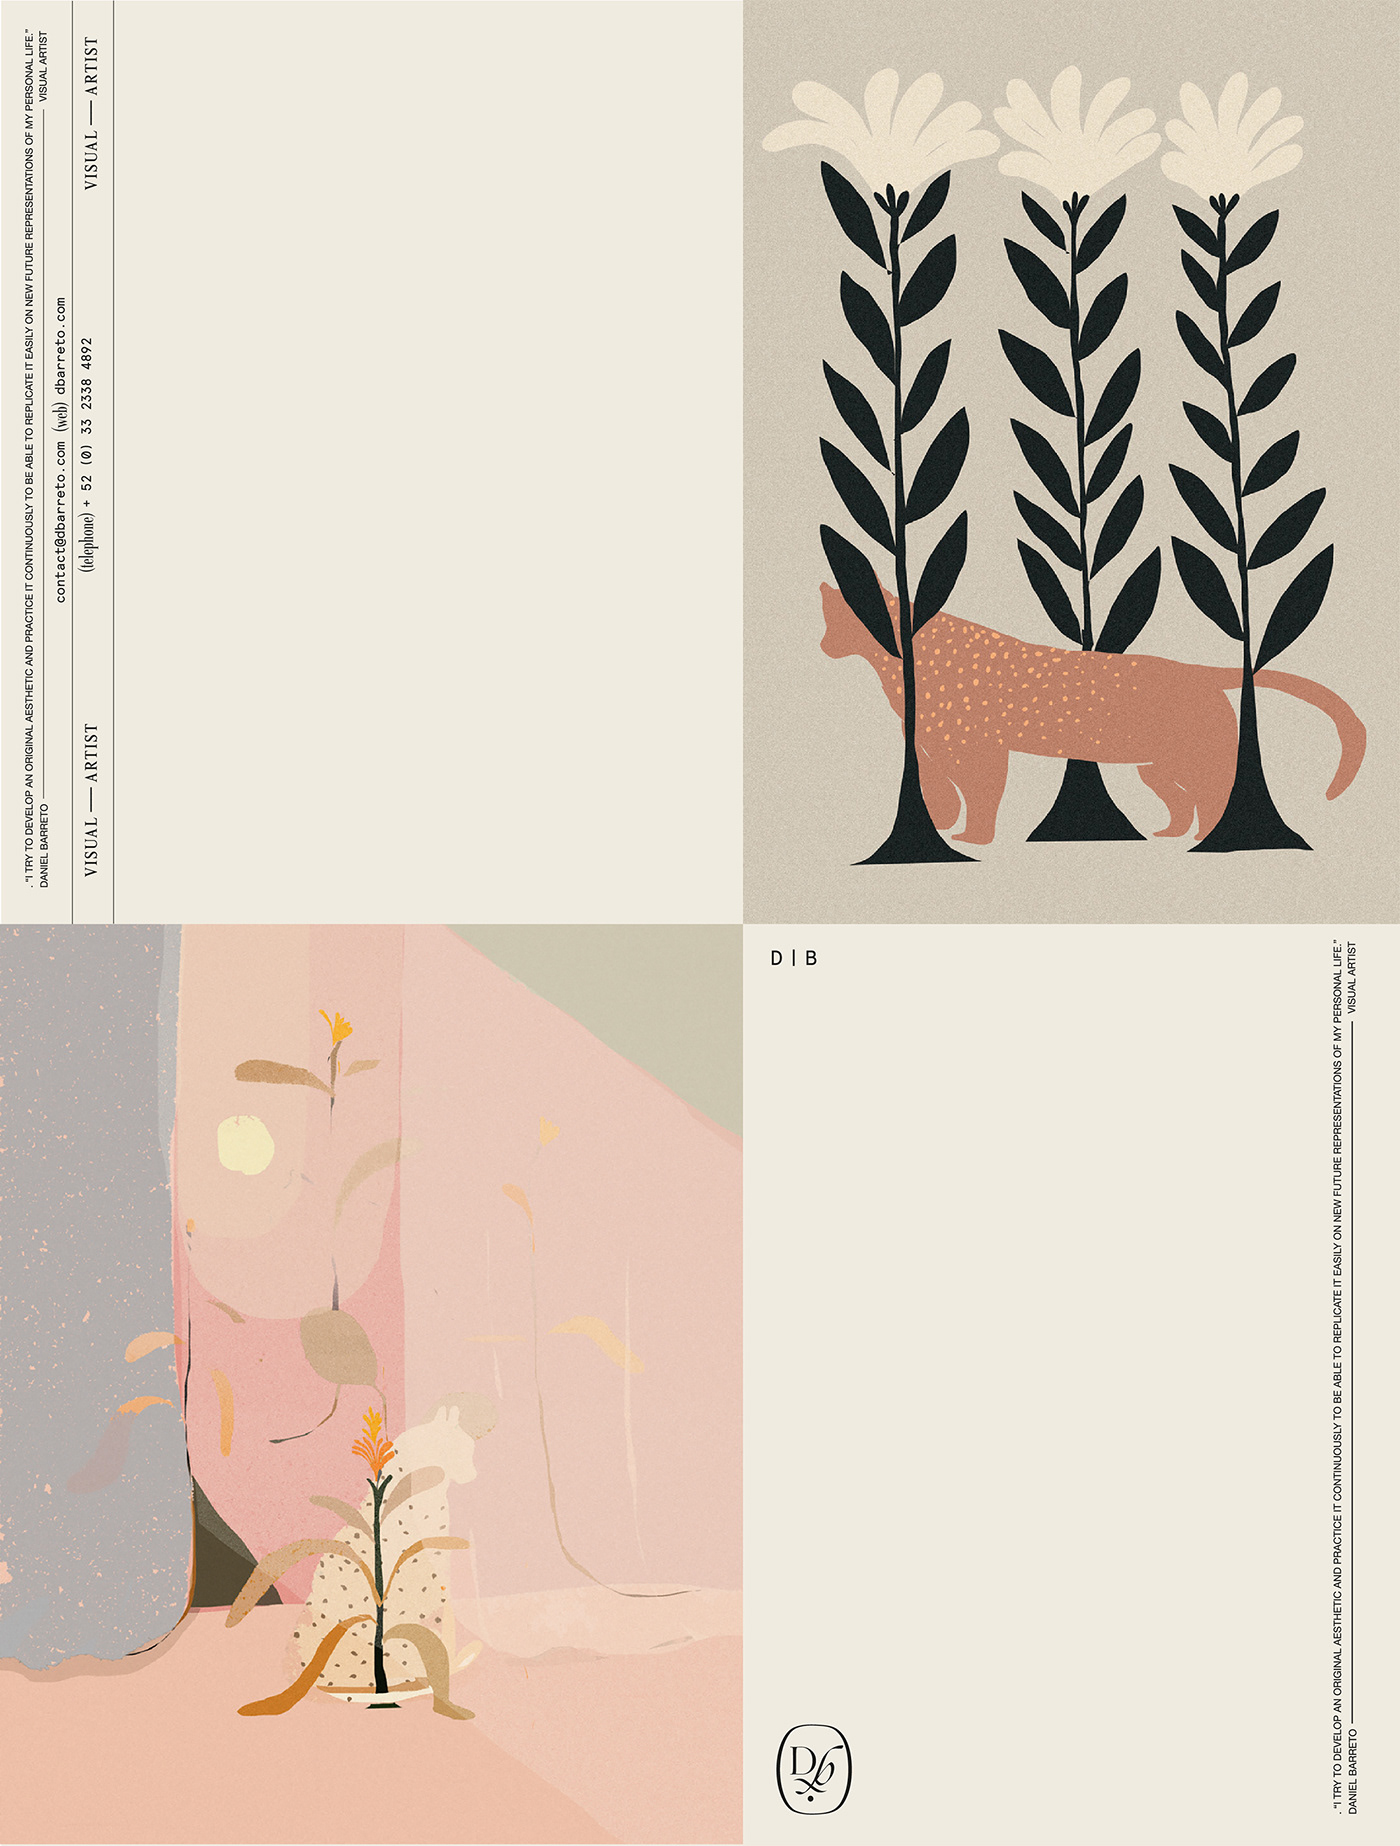 artmarks cooper editorialdesign graphicart layoutdesign Minimalism moderndesign modernism MUSEUMDESIGN VISUALARTIST